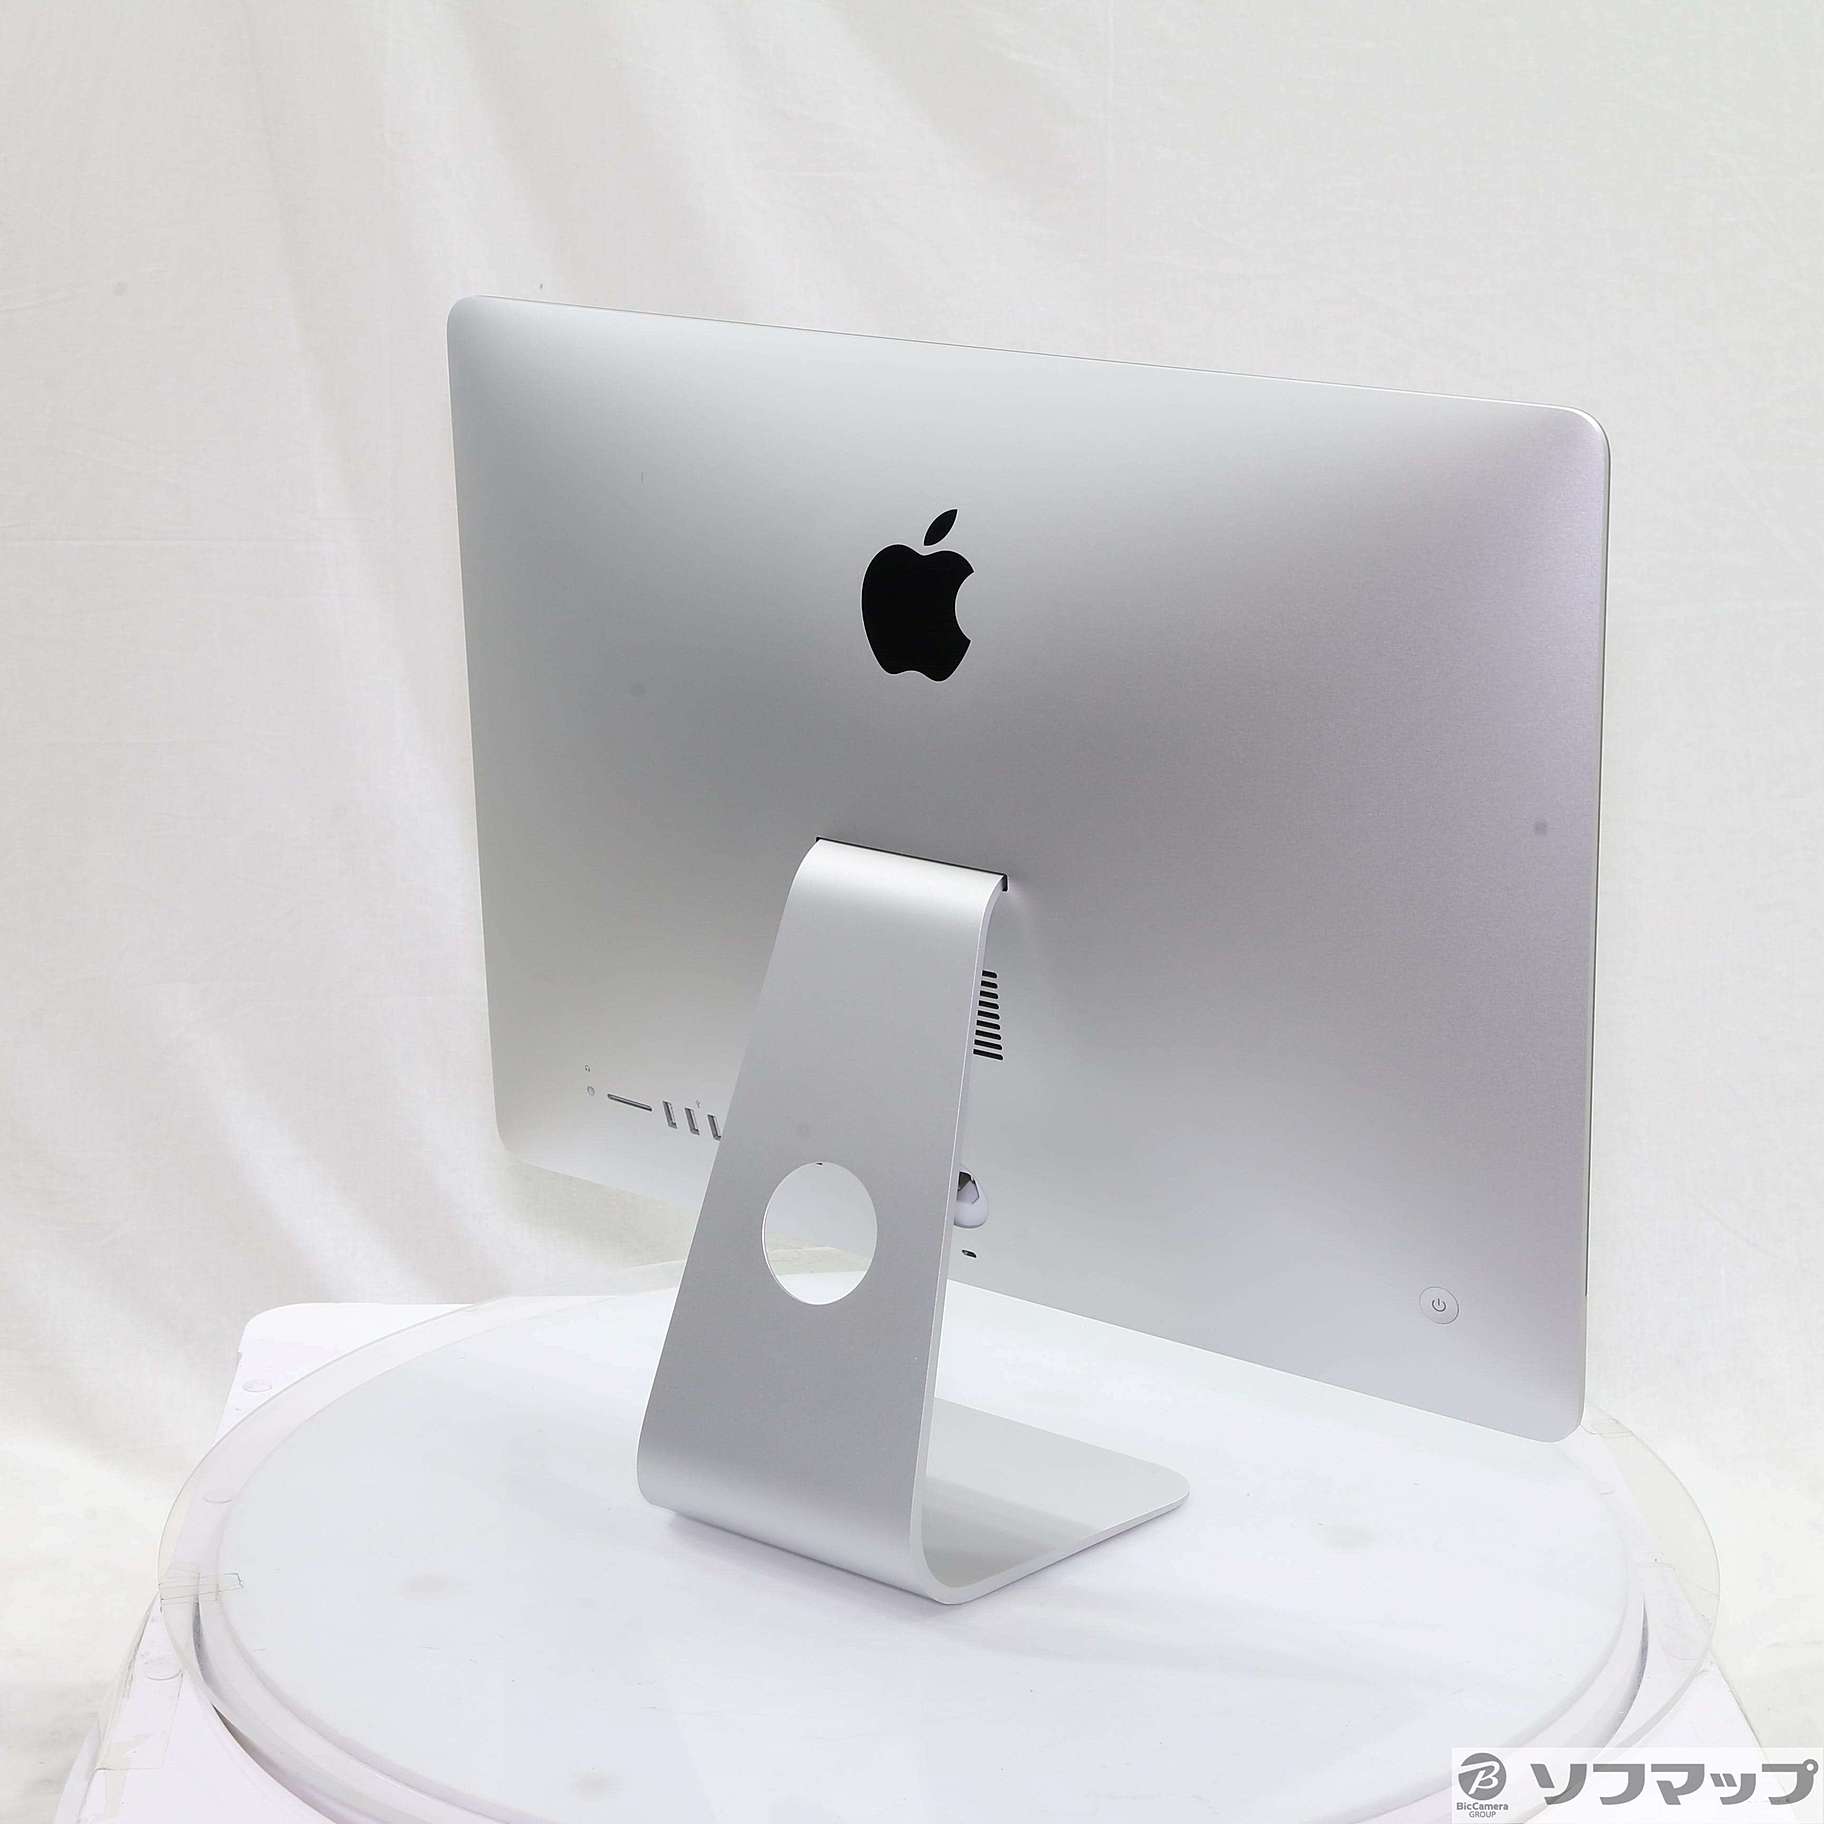 iMac VESA 21.5インチ 2015 late 16GB 1TB-